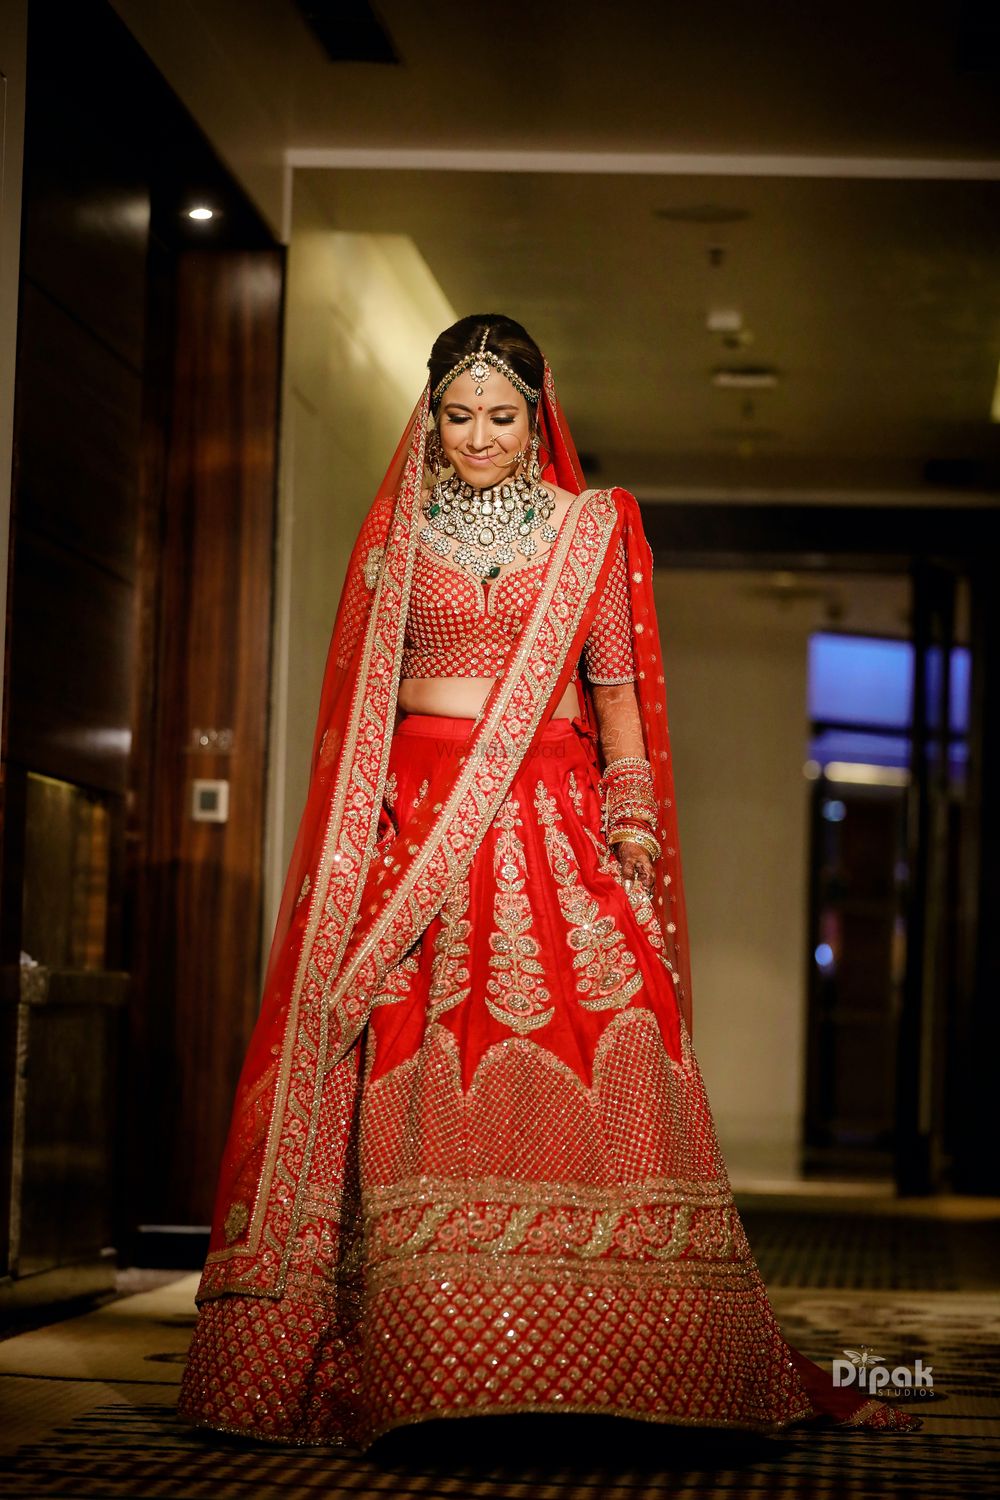 Photo of North Indian bride in red bridal lehenga